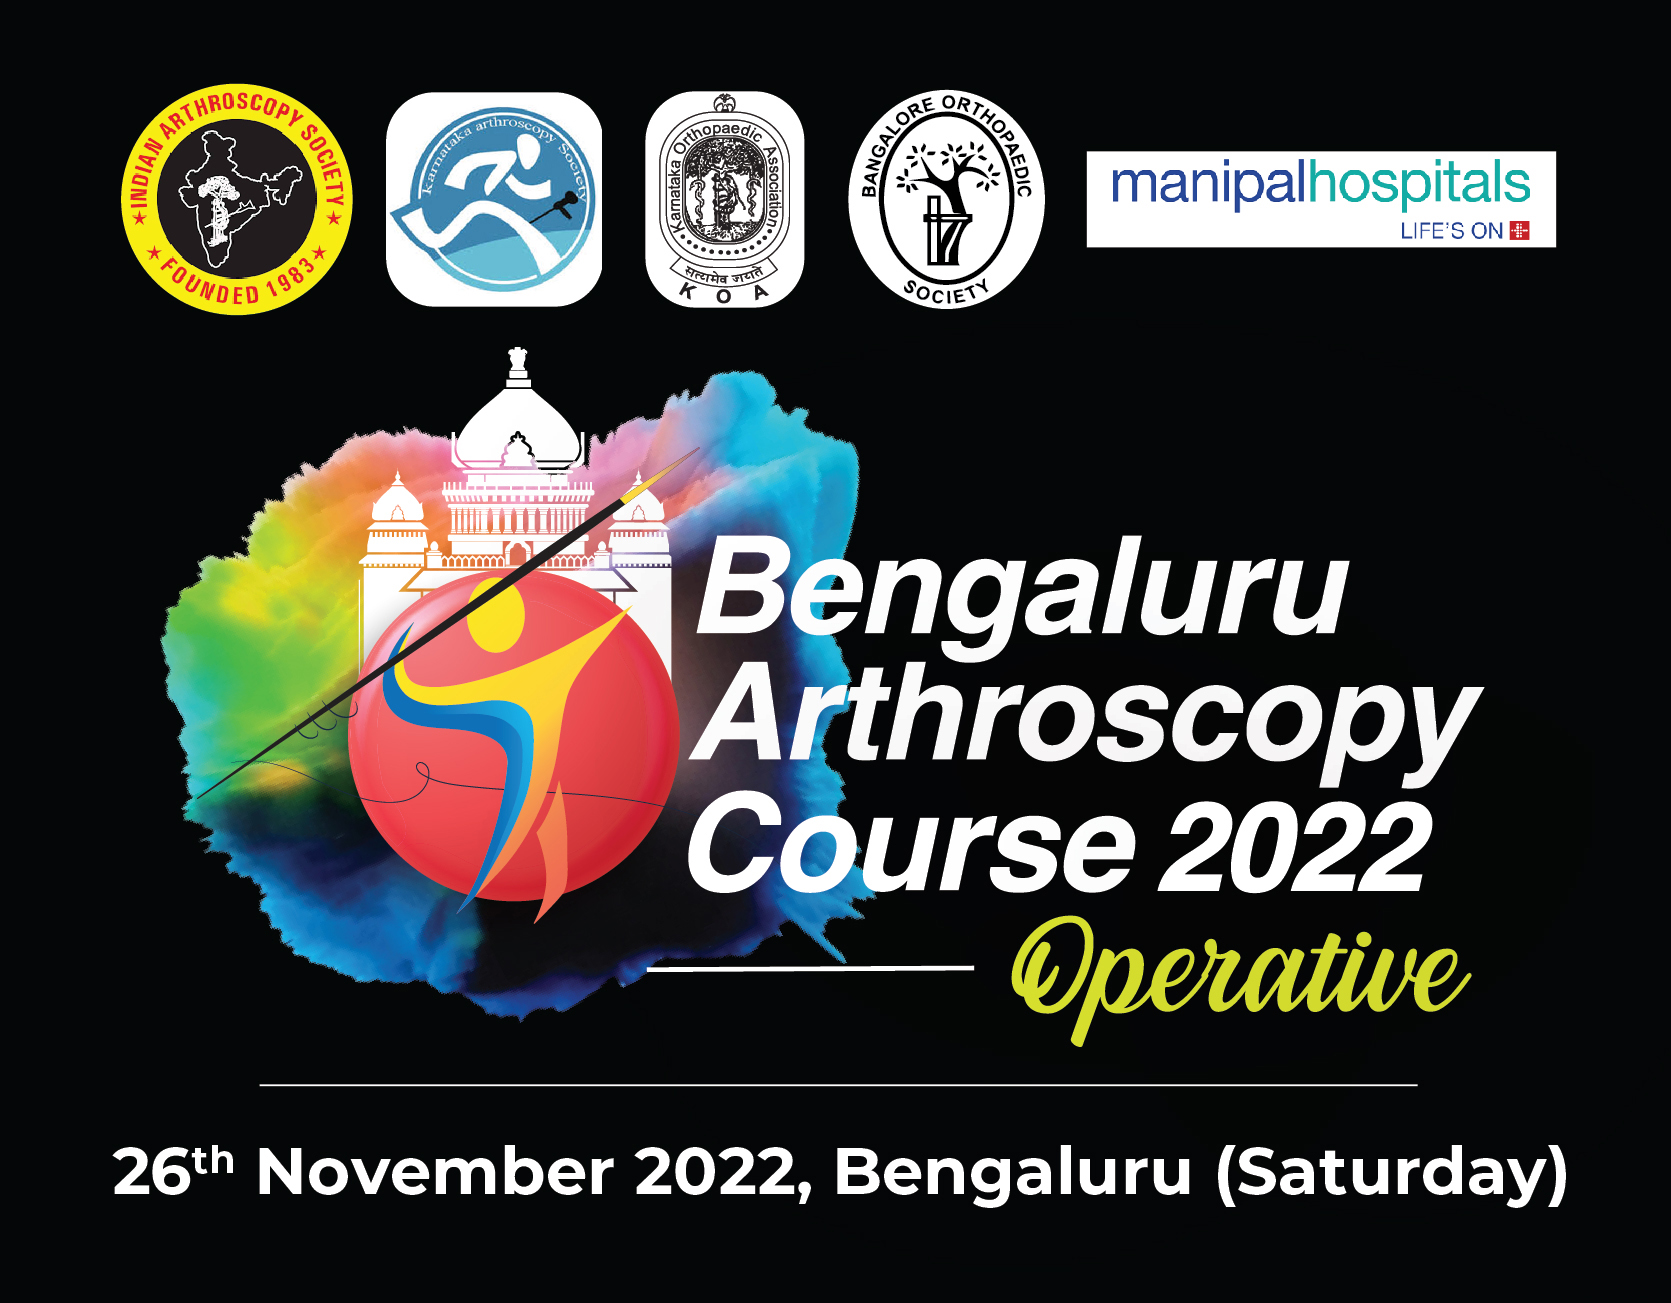 Bengaluru Arthroscopy Course, Operative